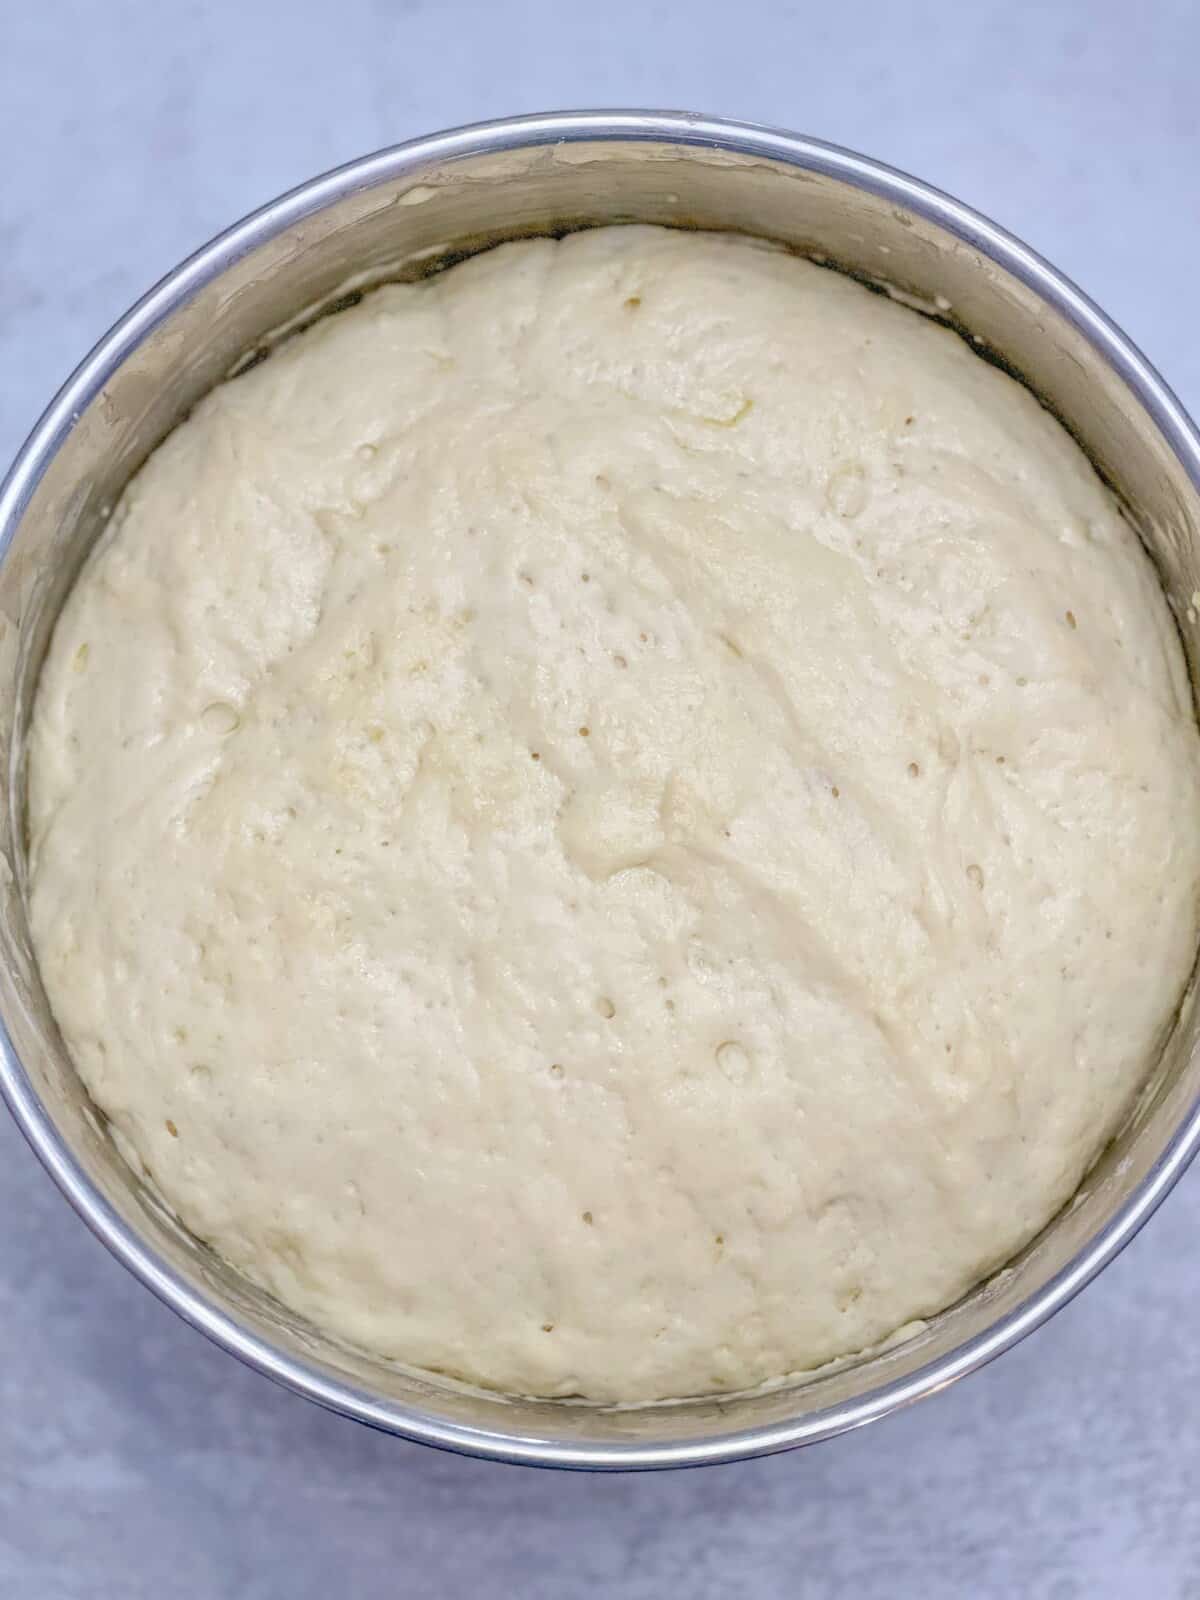 10 minute all purpose dough ready to make delicious recipes.